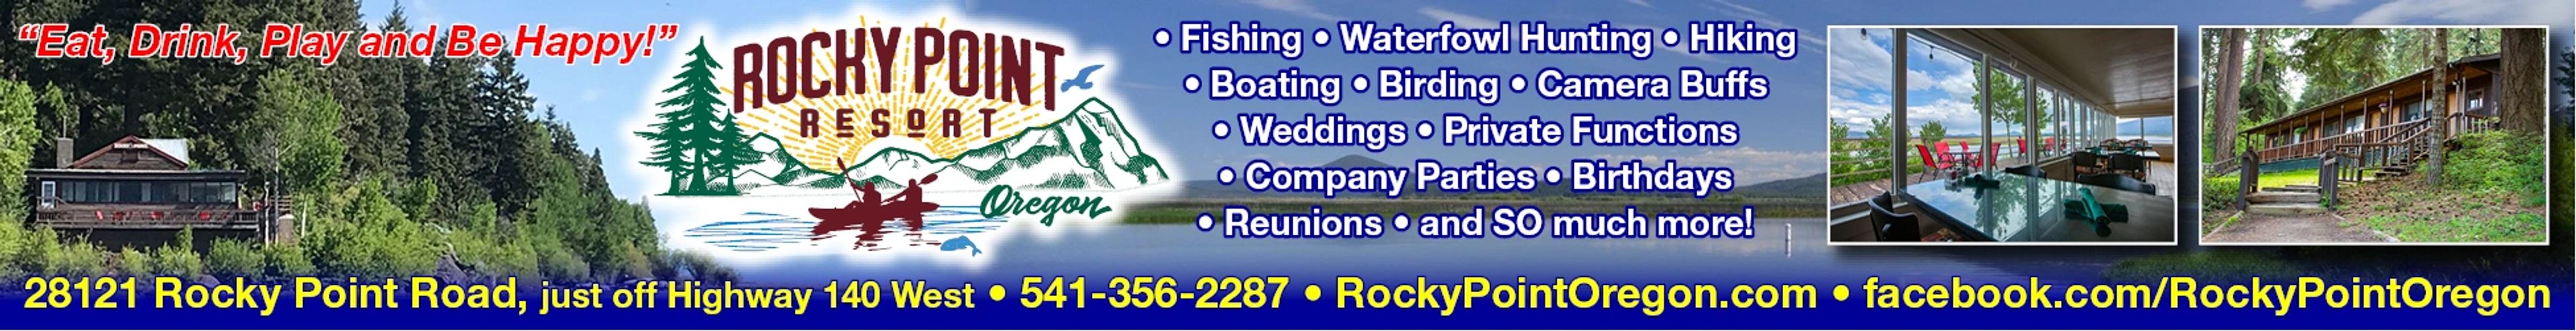 Rocky Point Resort - Lodging, Restaurant, Marina by Crater Lake Backyard